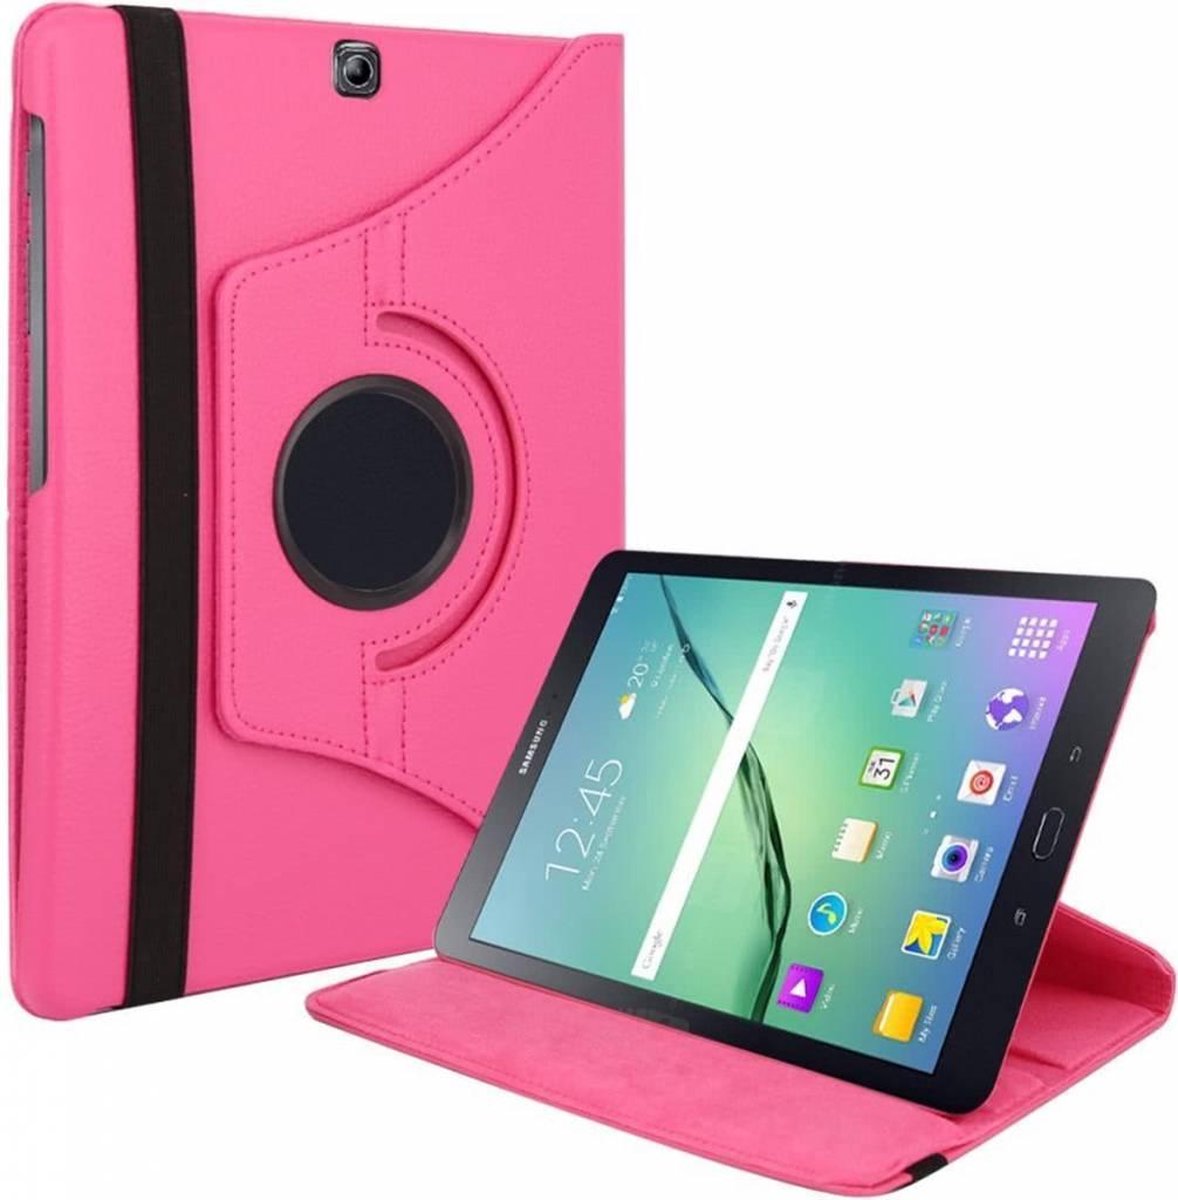 ProCase Coque Samsung Galaxy Tab S2 9.7, Etui Folio pour Tablette